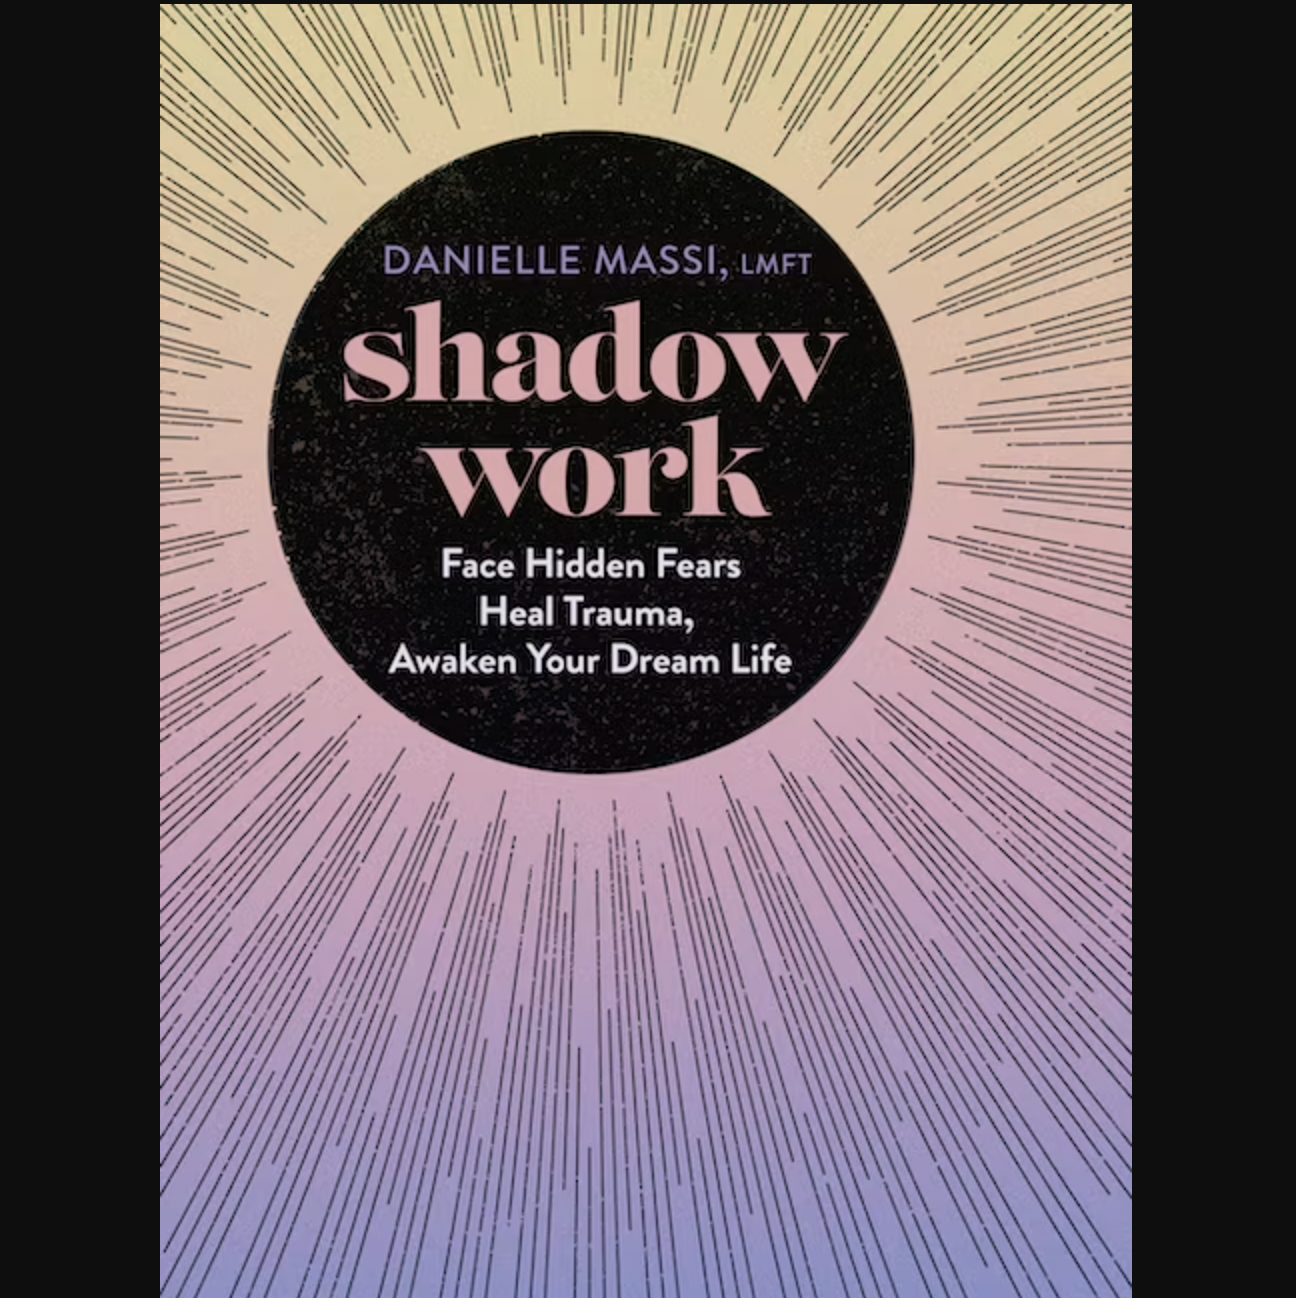 Shadow Work: Face Hidden Fears Heal Trauma Awaken Your Dream Life by Danielle Massi